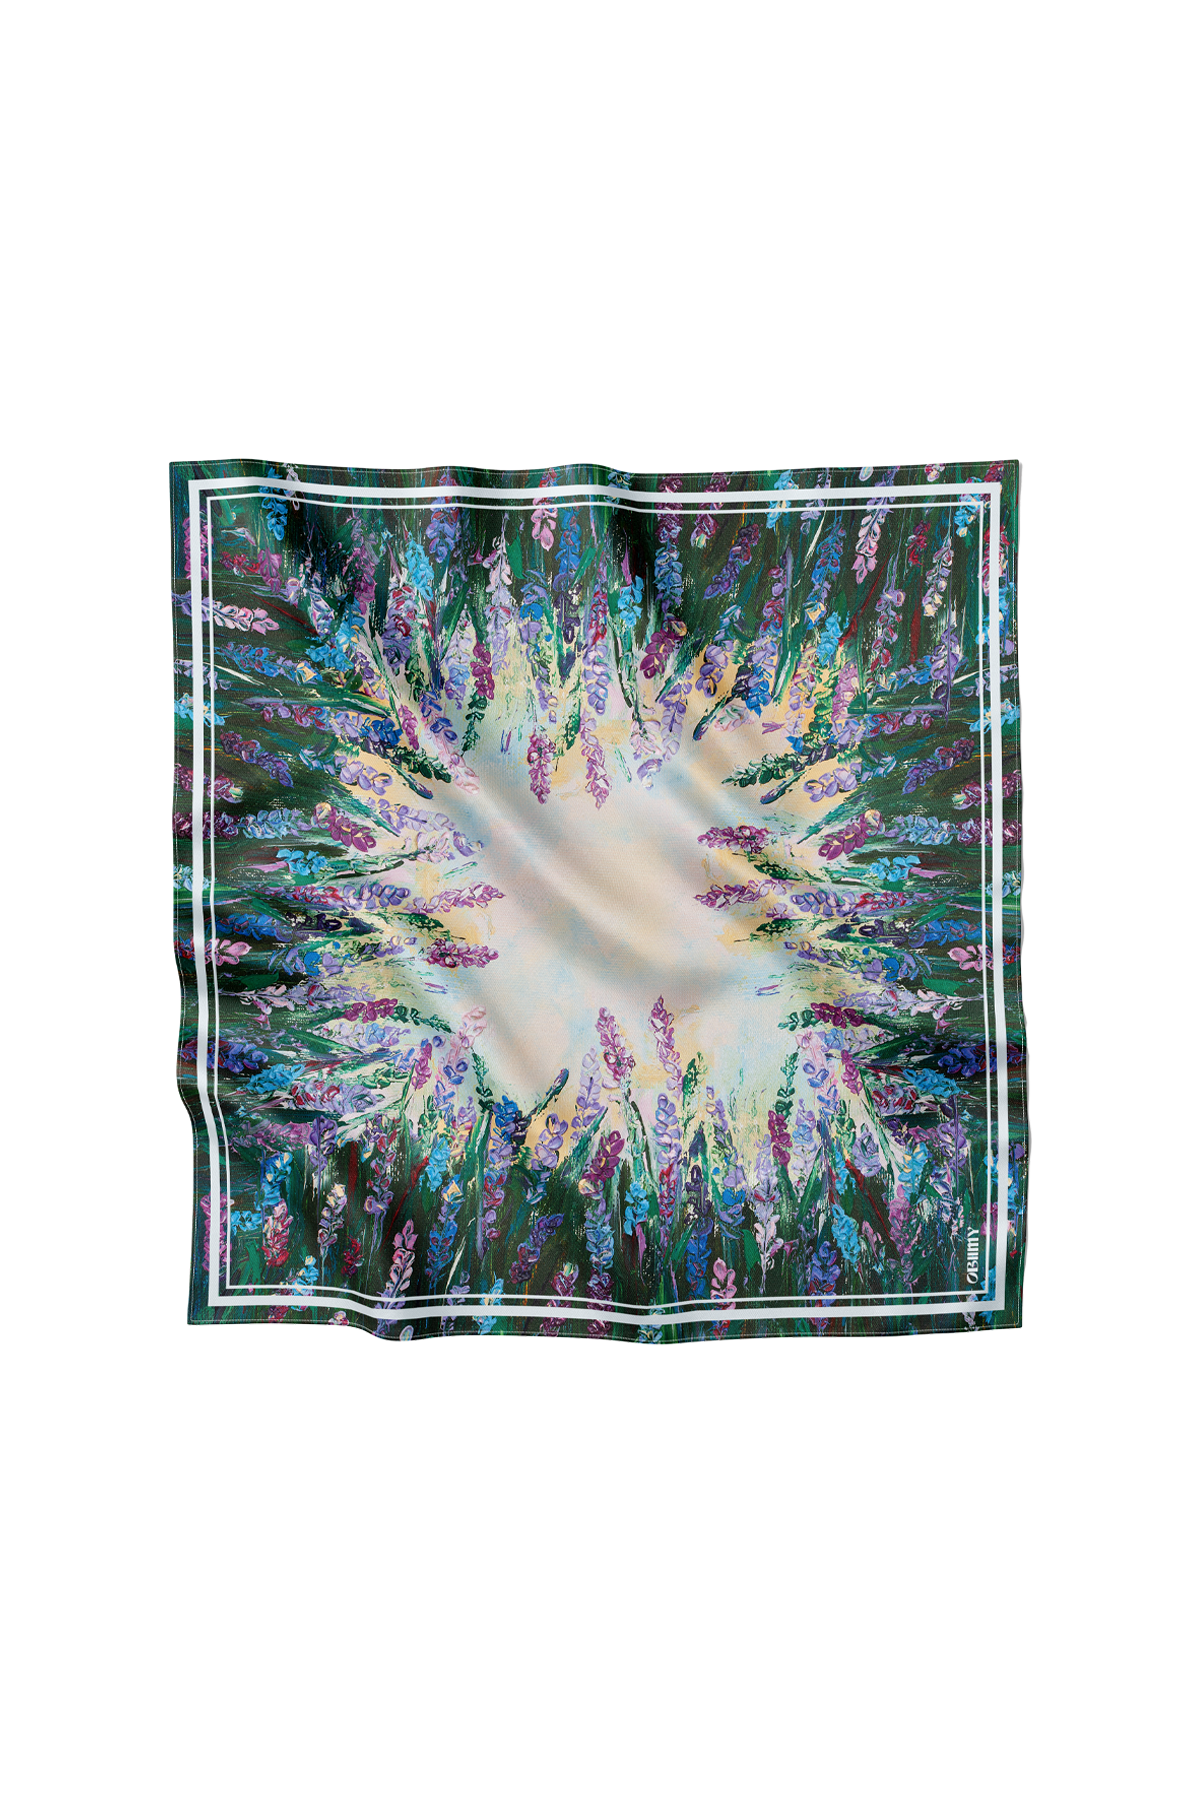 Silk scarf "Energy" 65*65